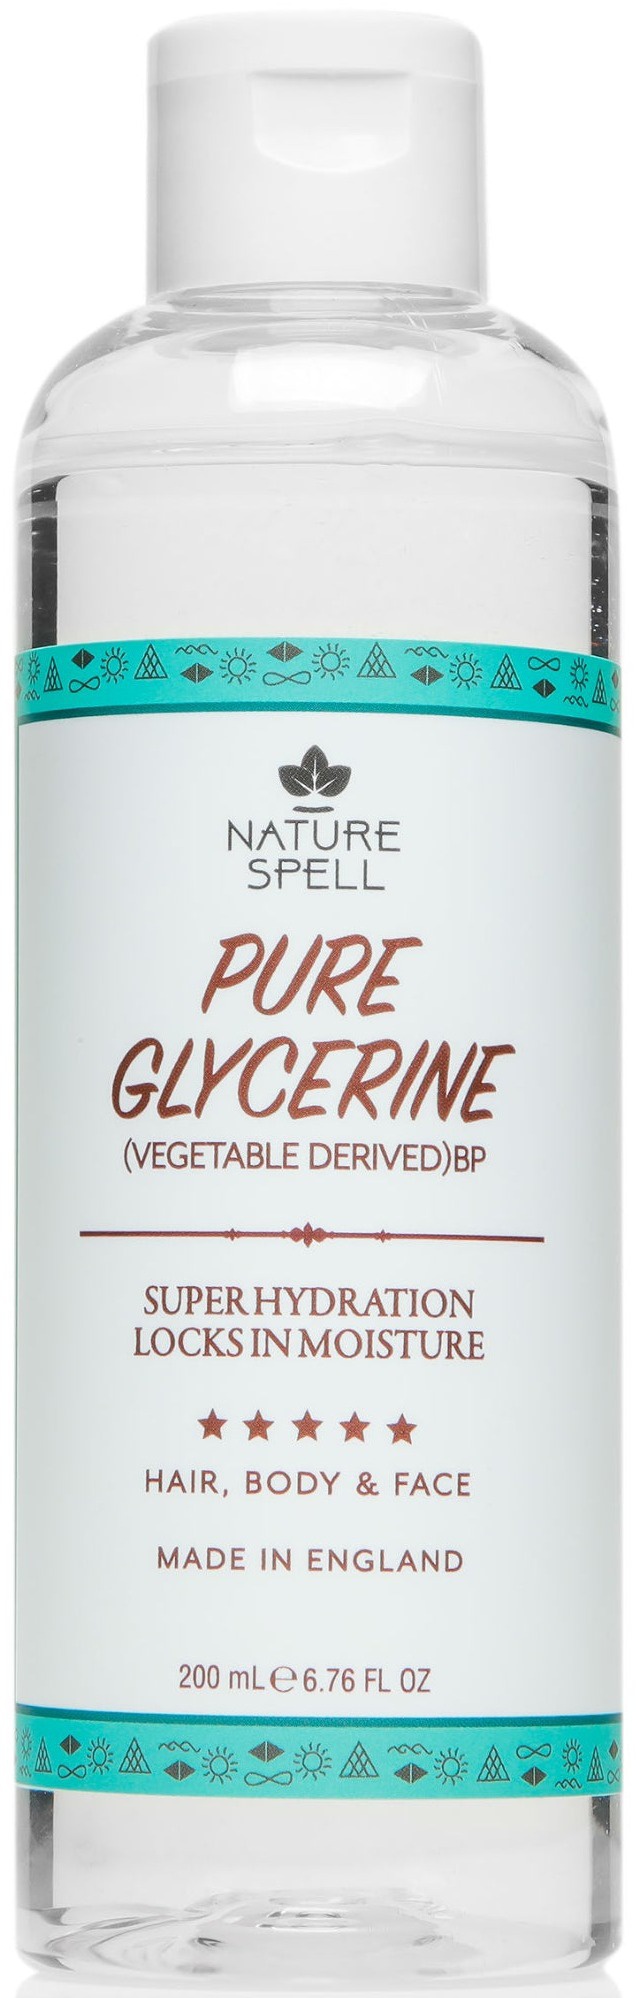 NATURE SPELL Pure Glycerine